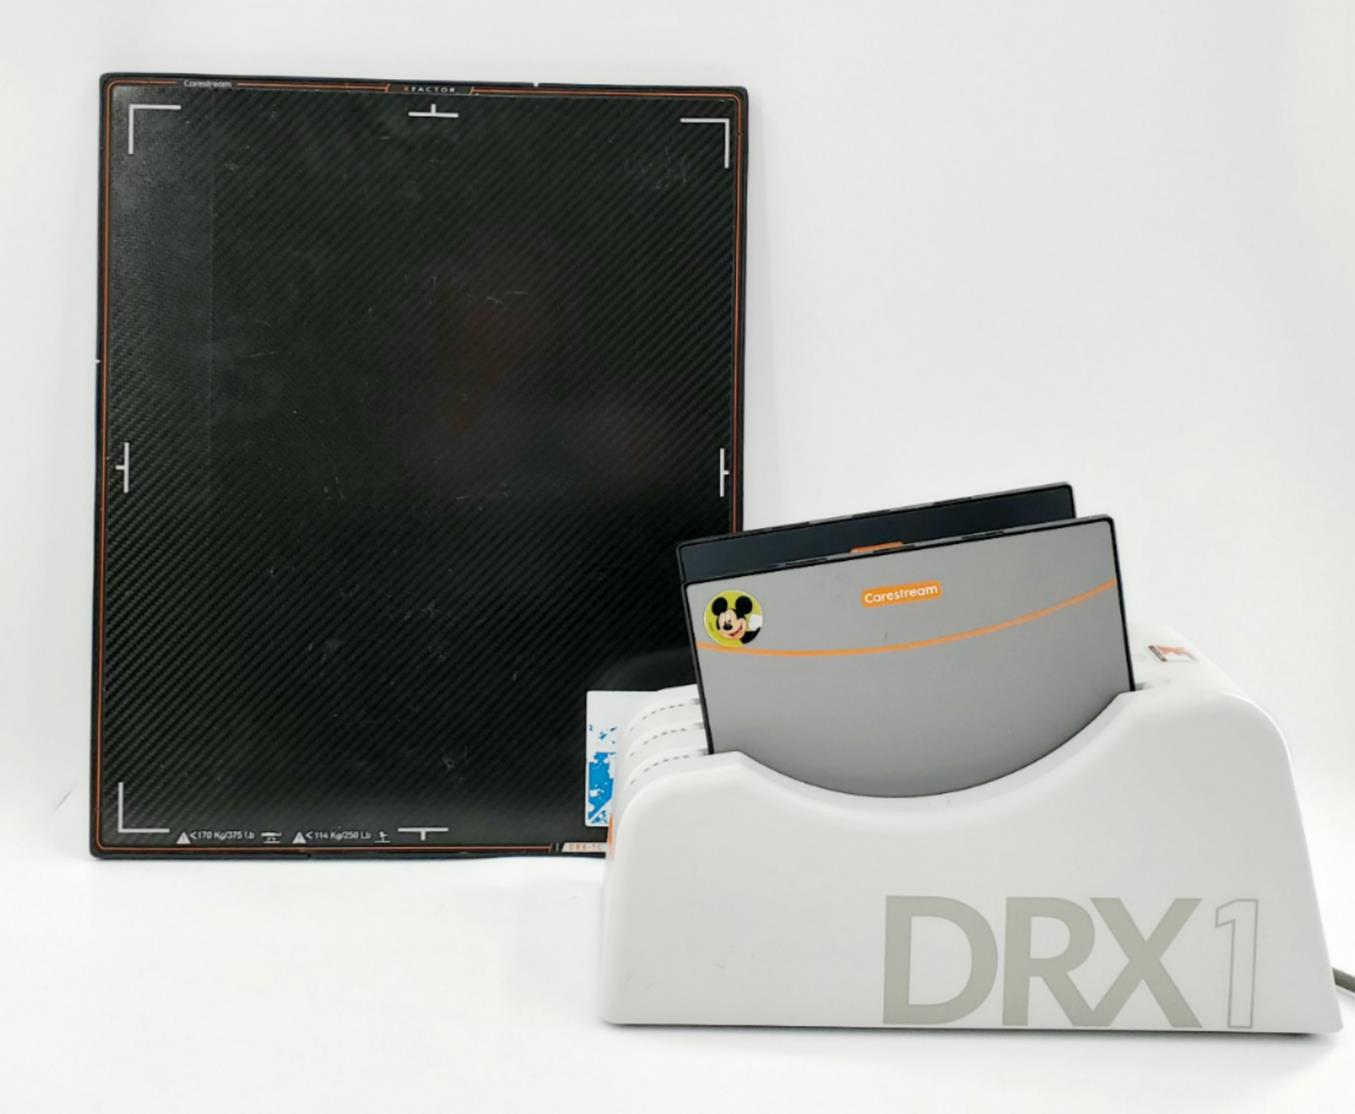 Carestream DRX-1C